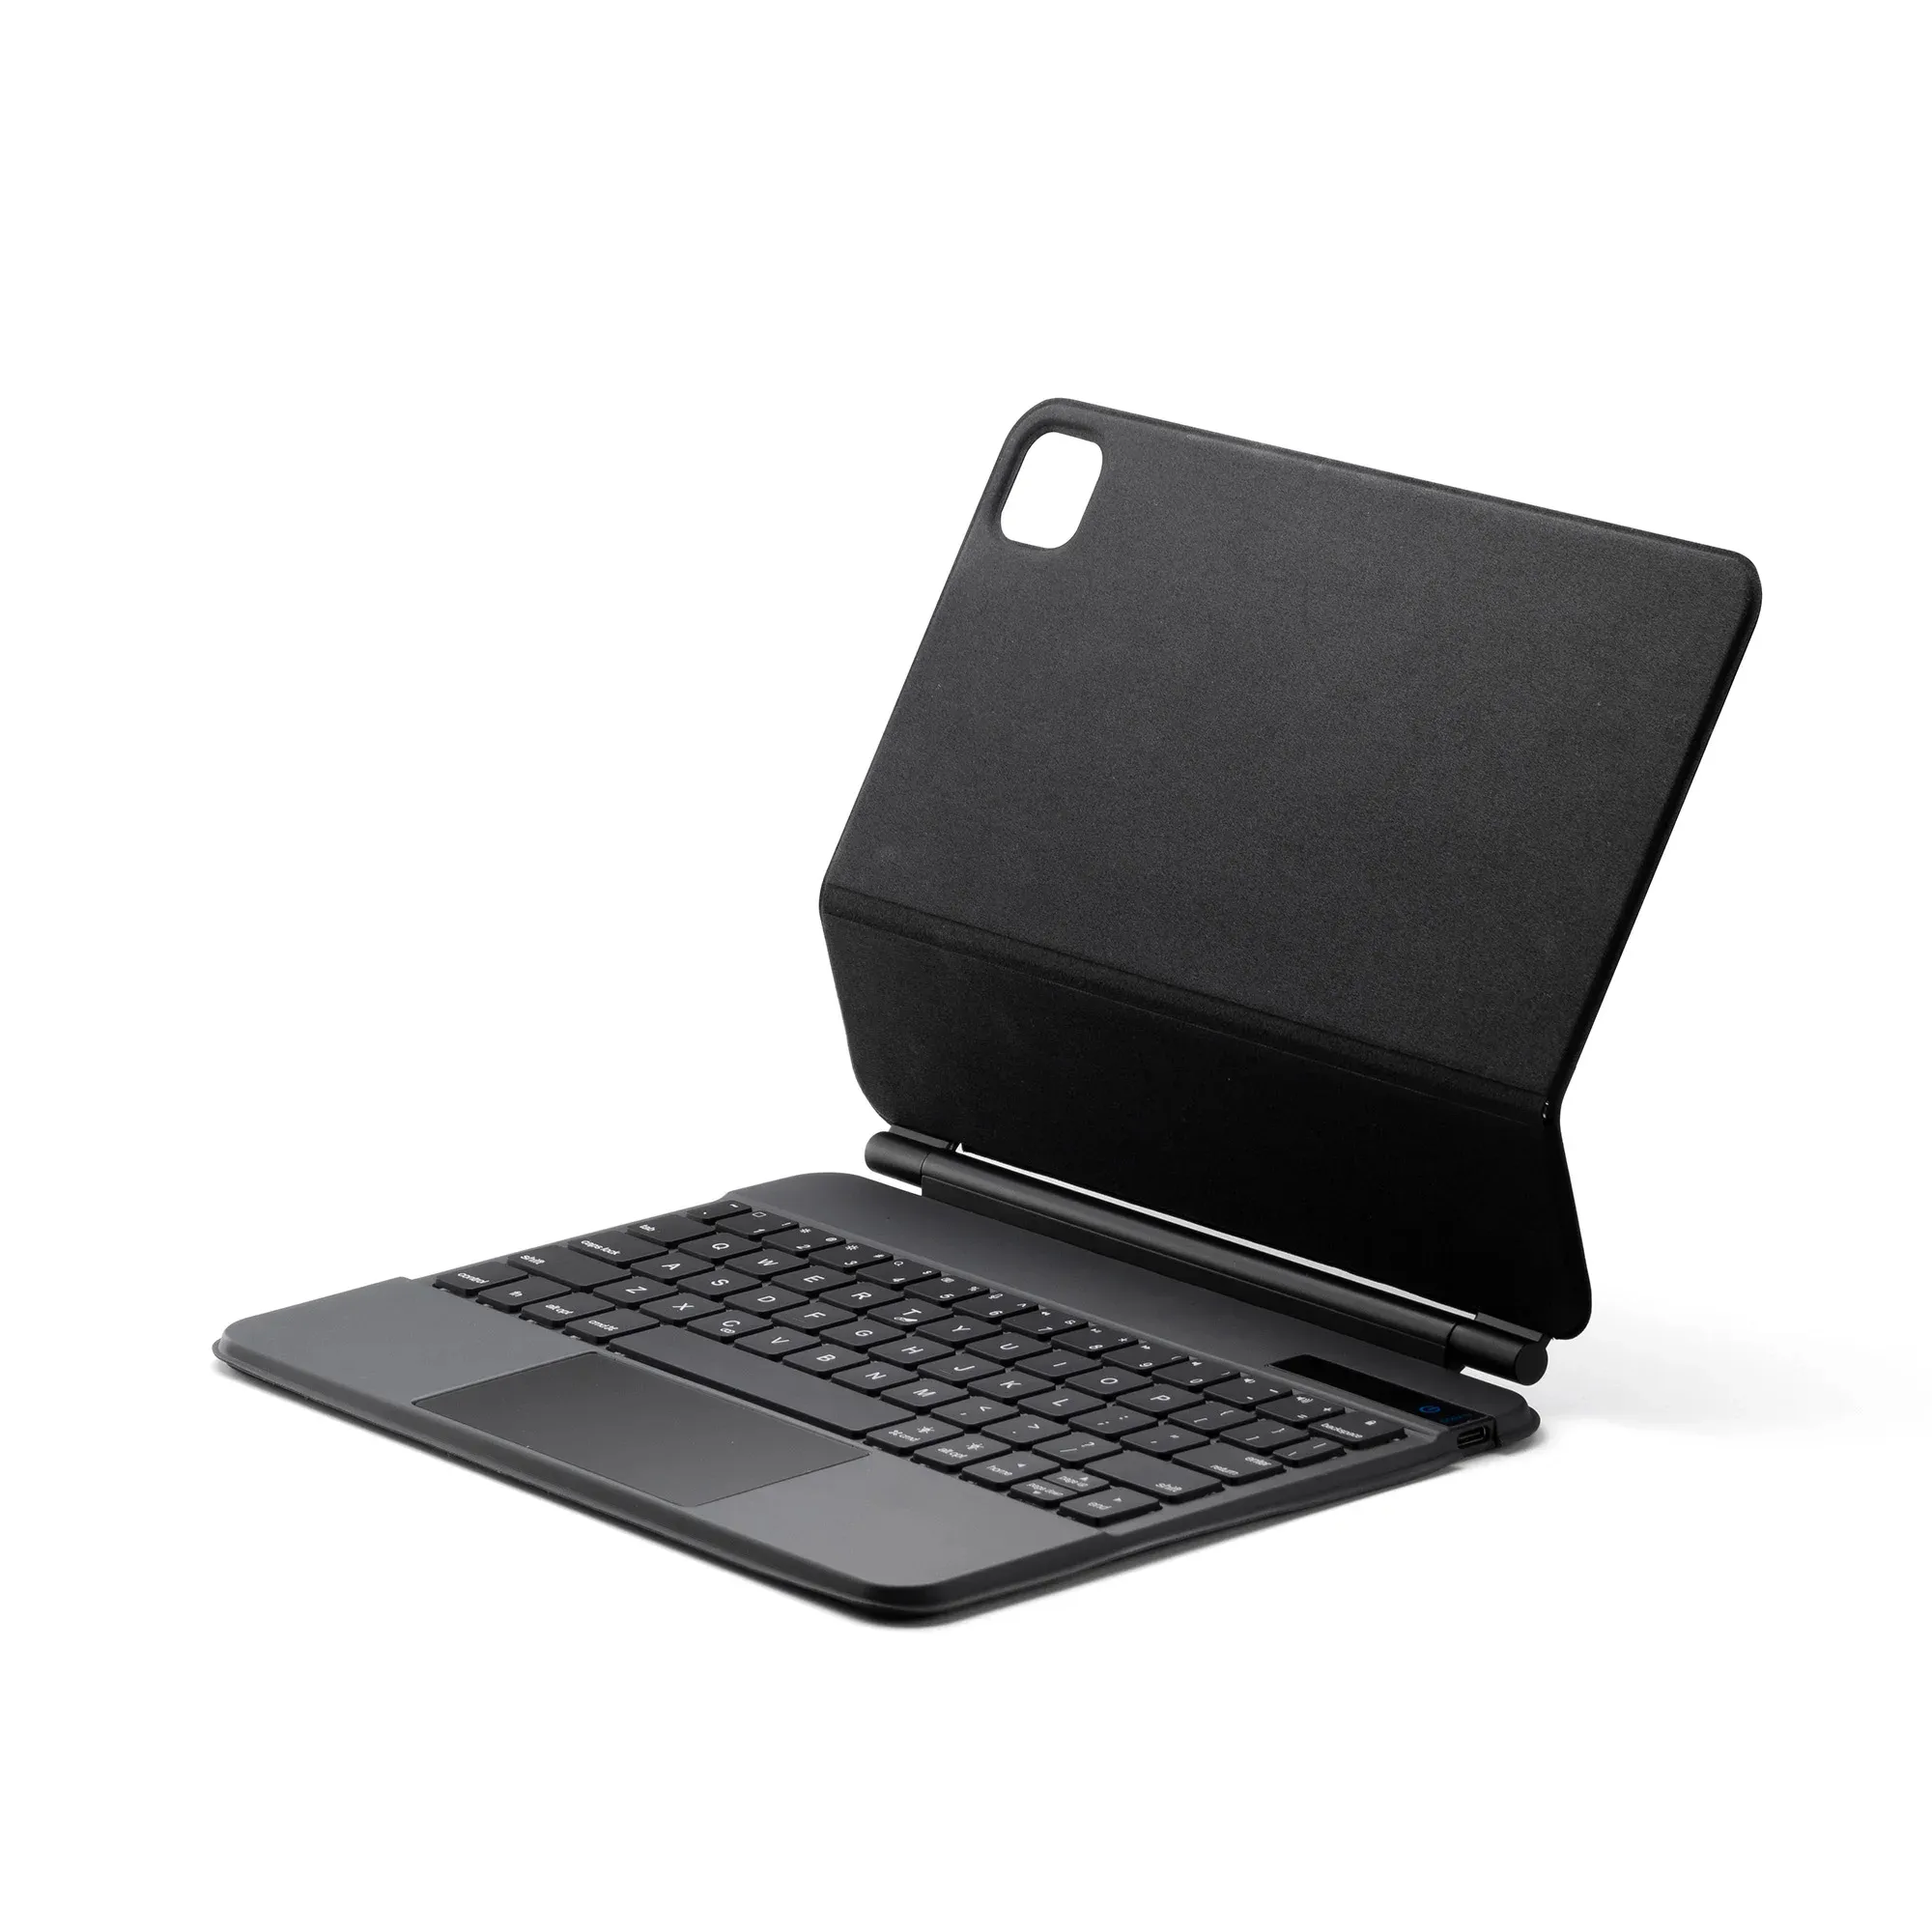 SY148 sarung Tablet ajaib, sarung Keyboard Touchpad untuk iPad Pro iPad Air 109 11 inci kompatibel